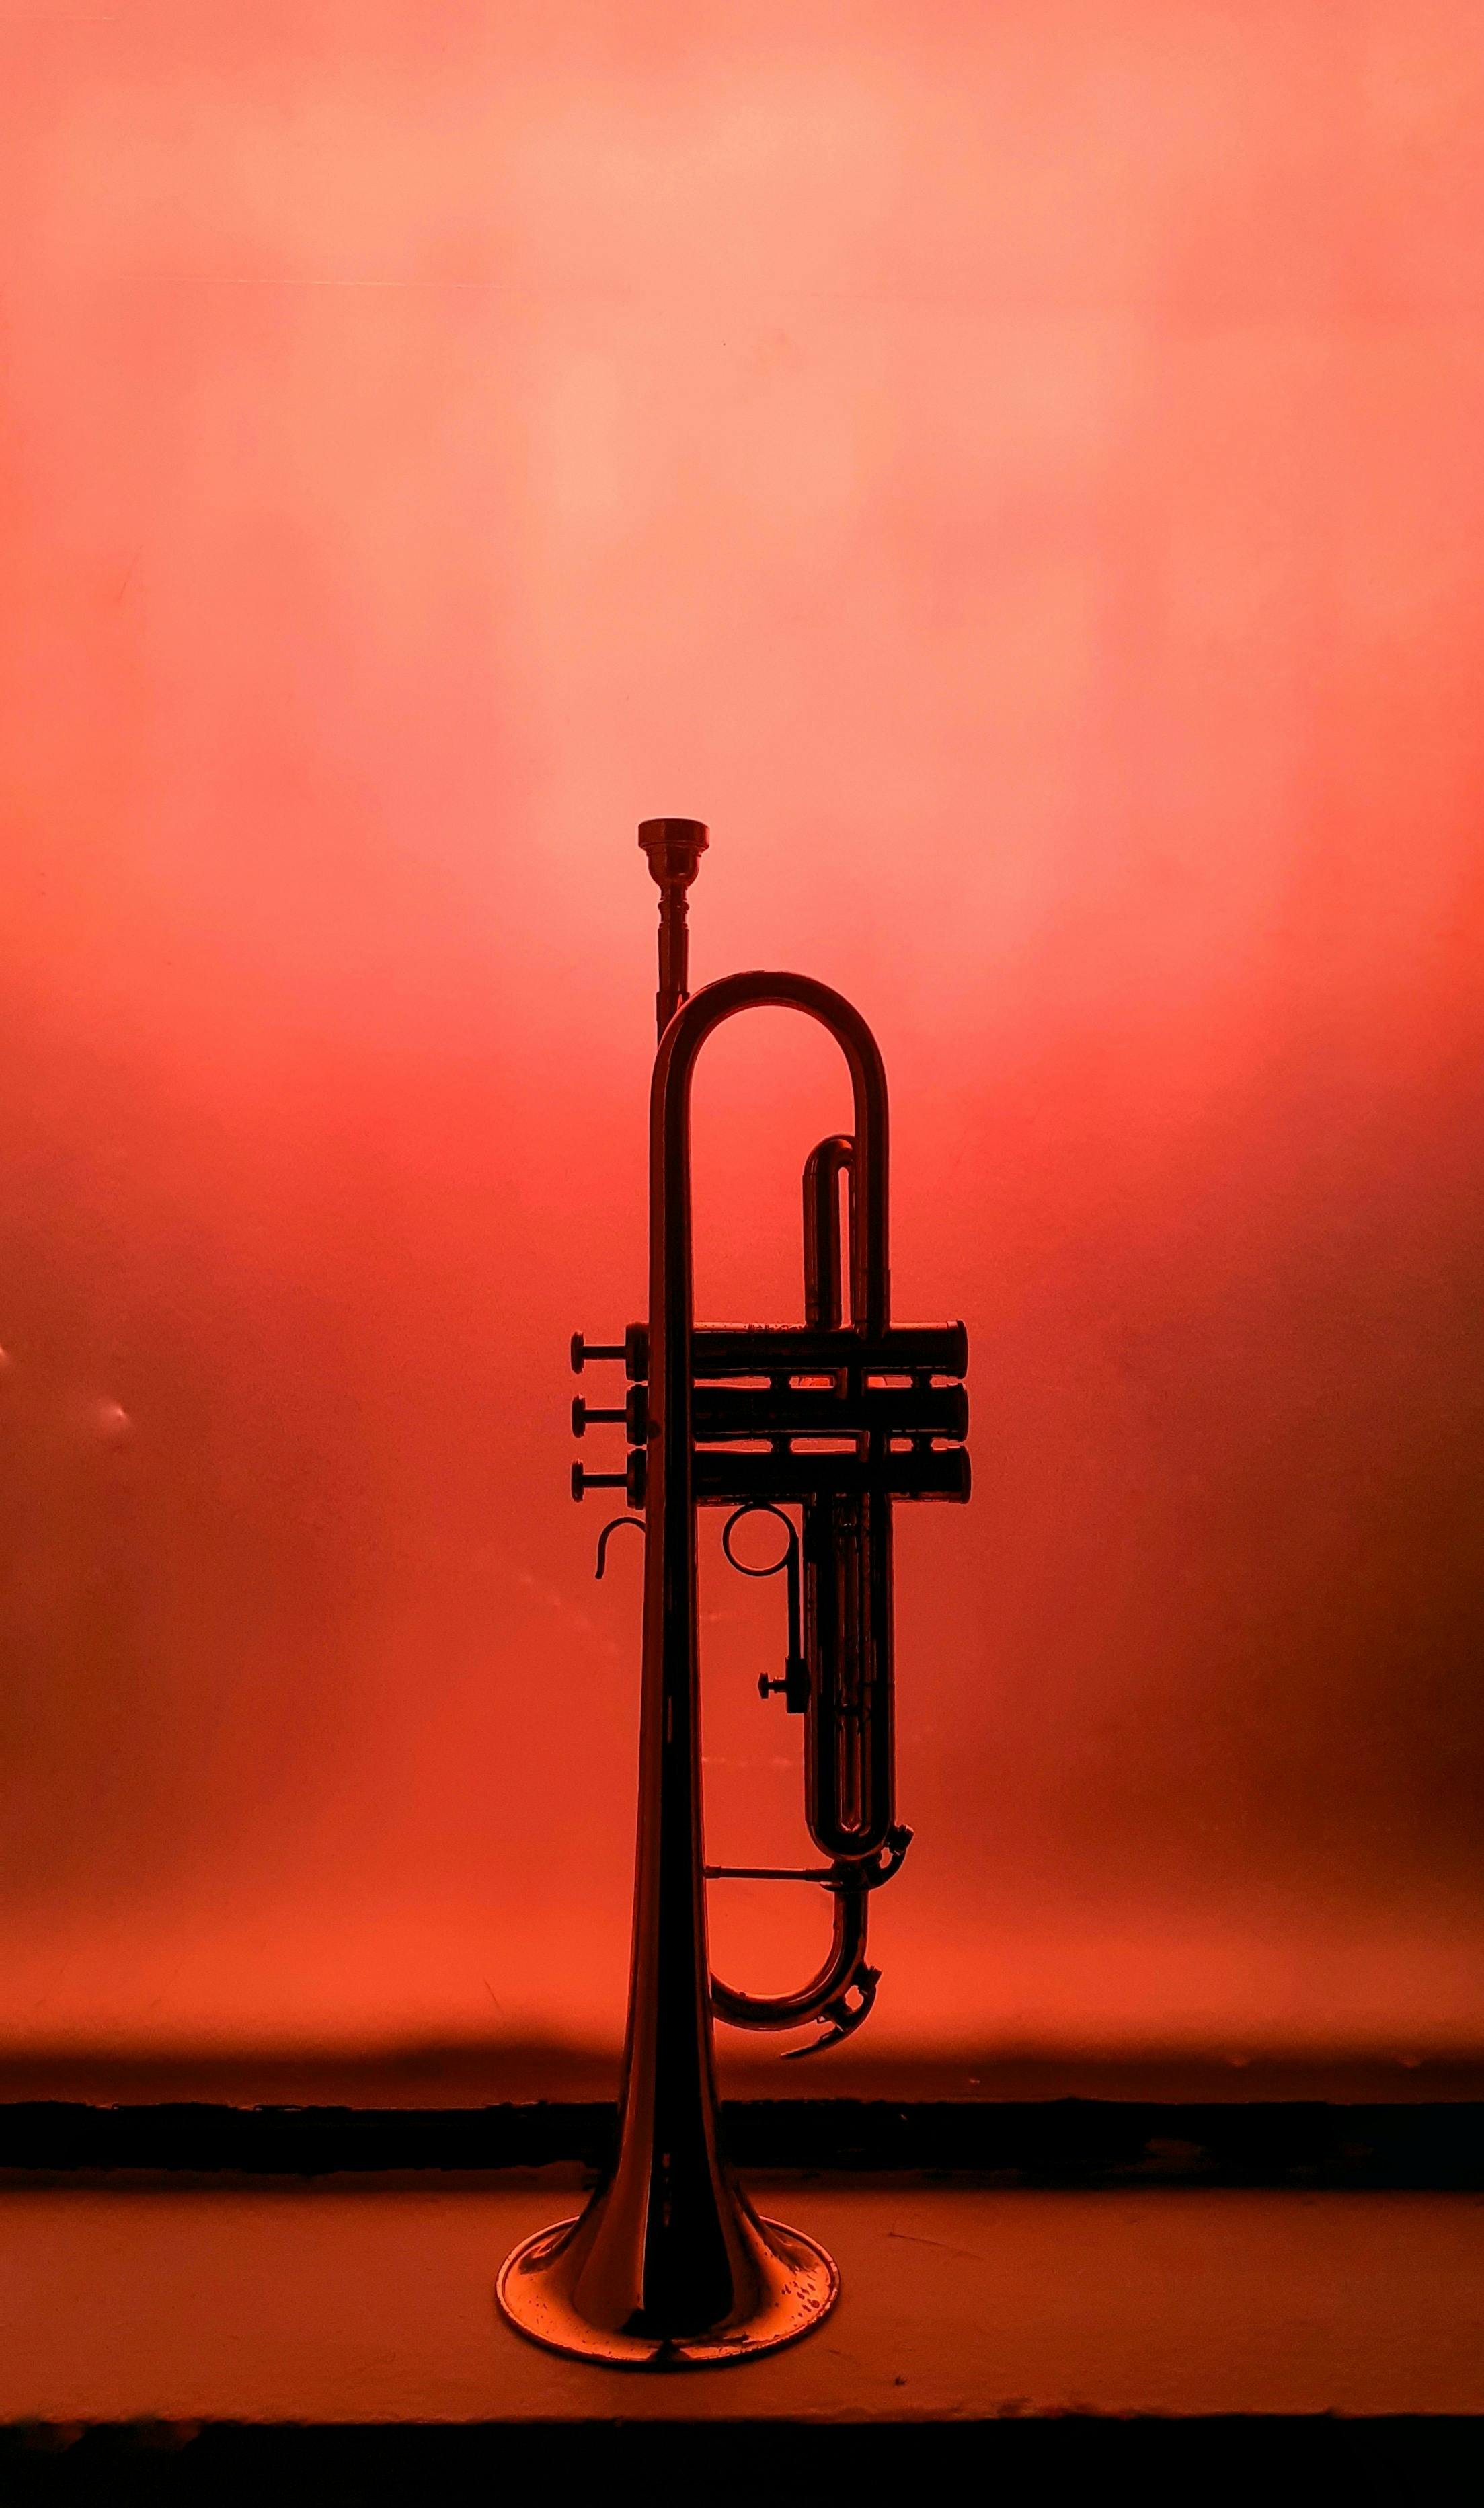 1000 Free Brass  Trumpet Images  Pixabay